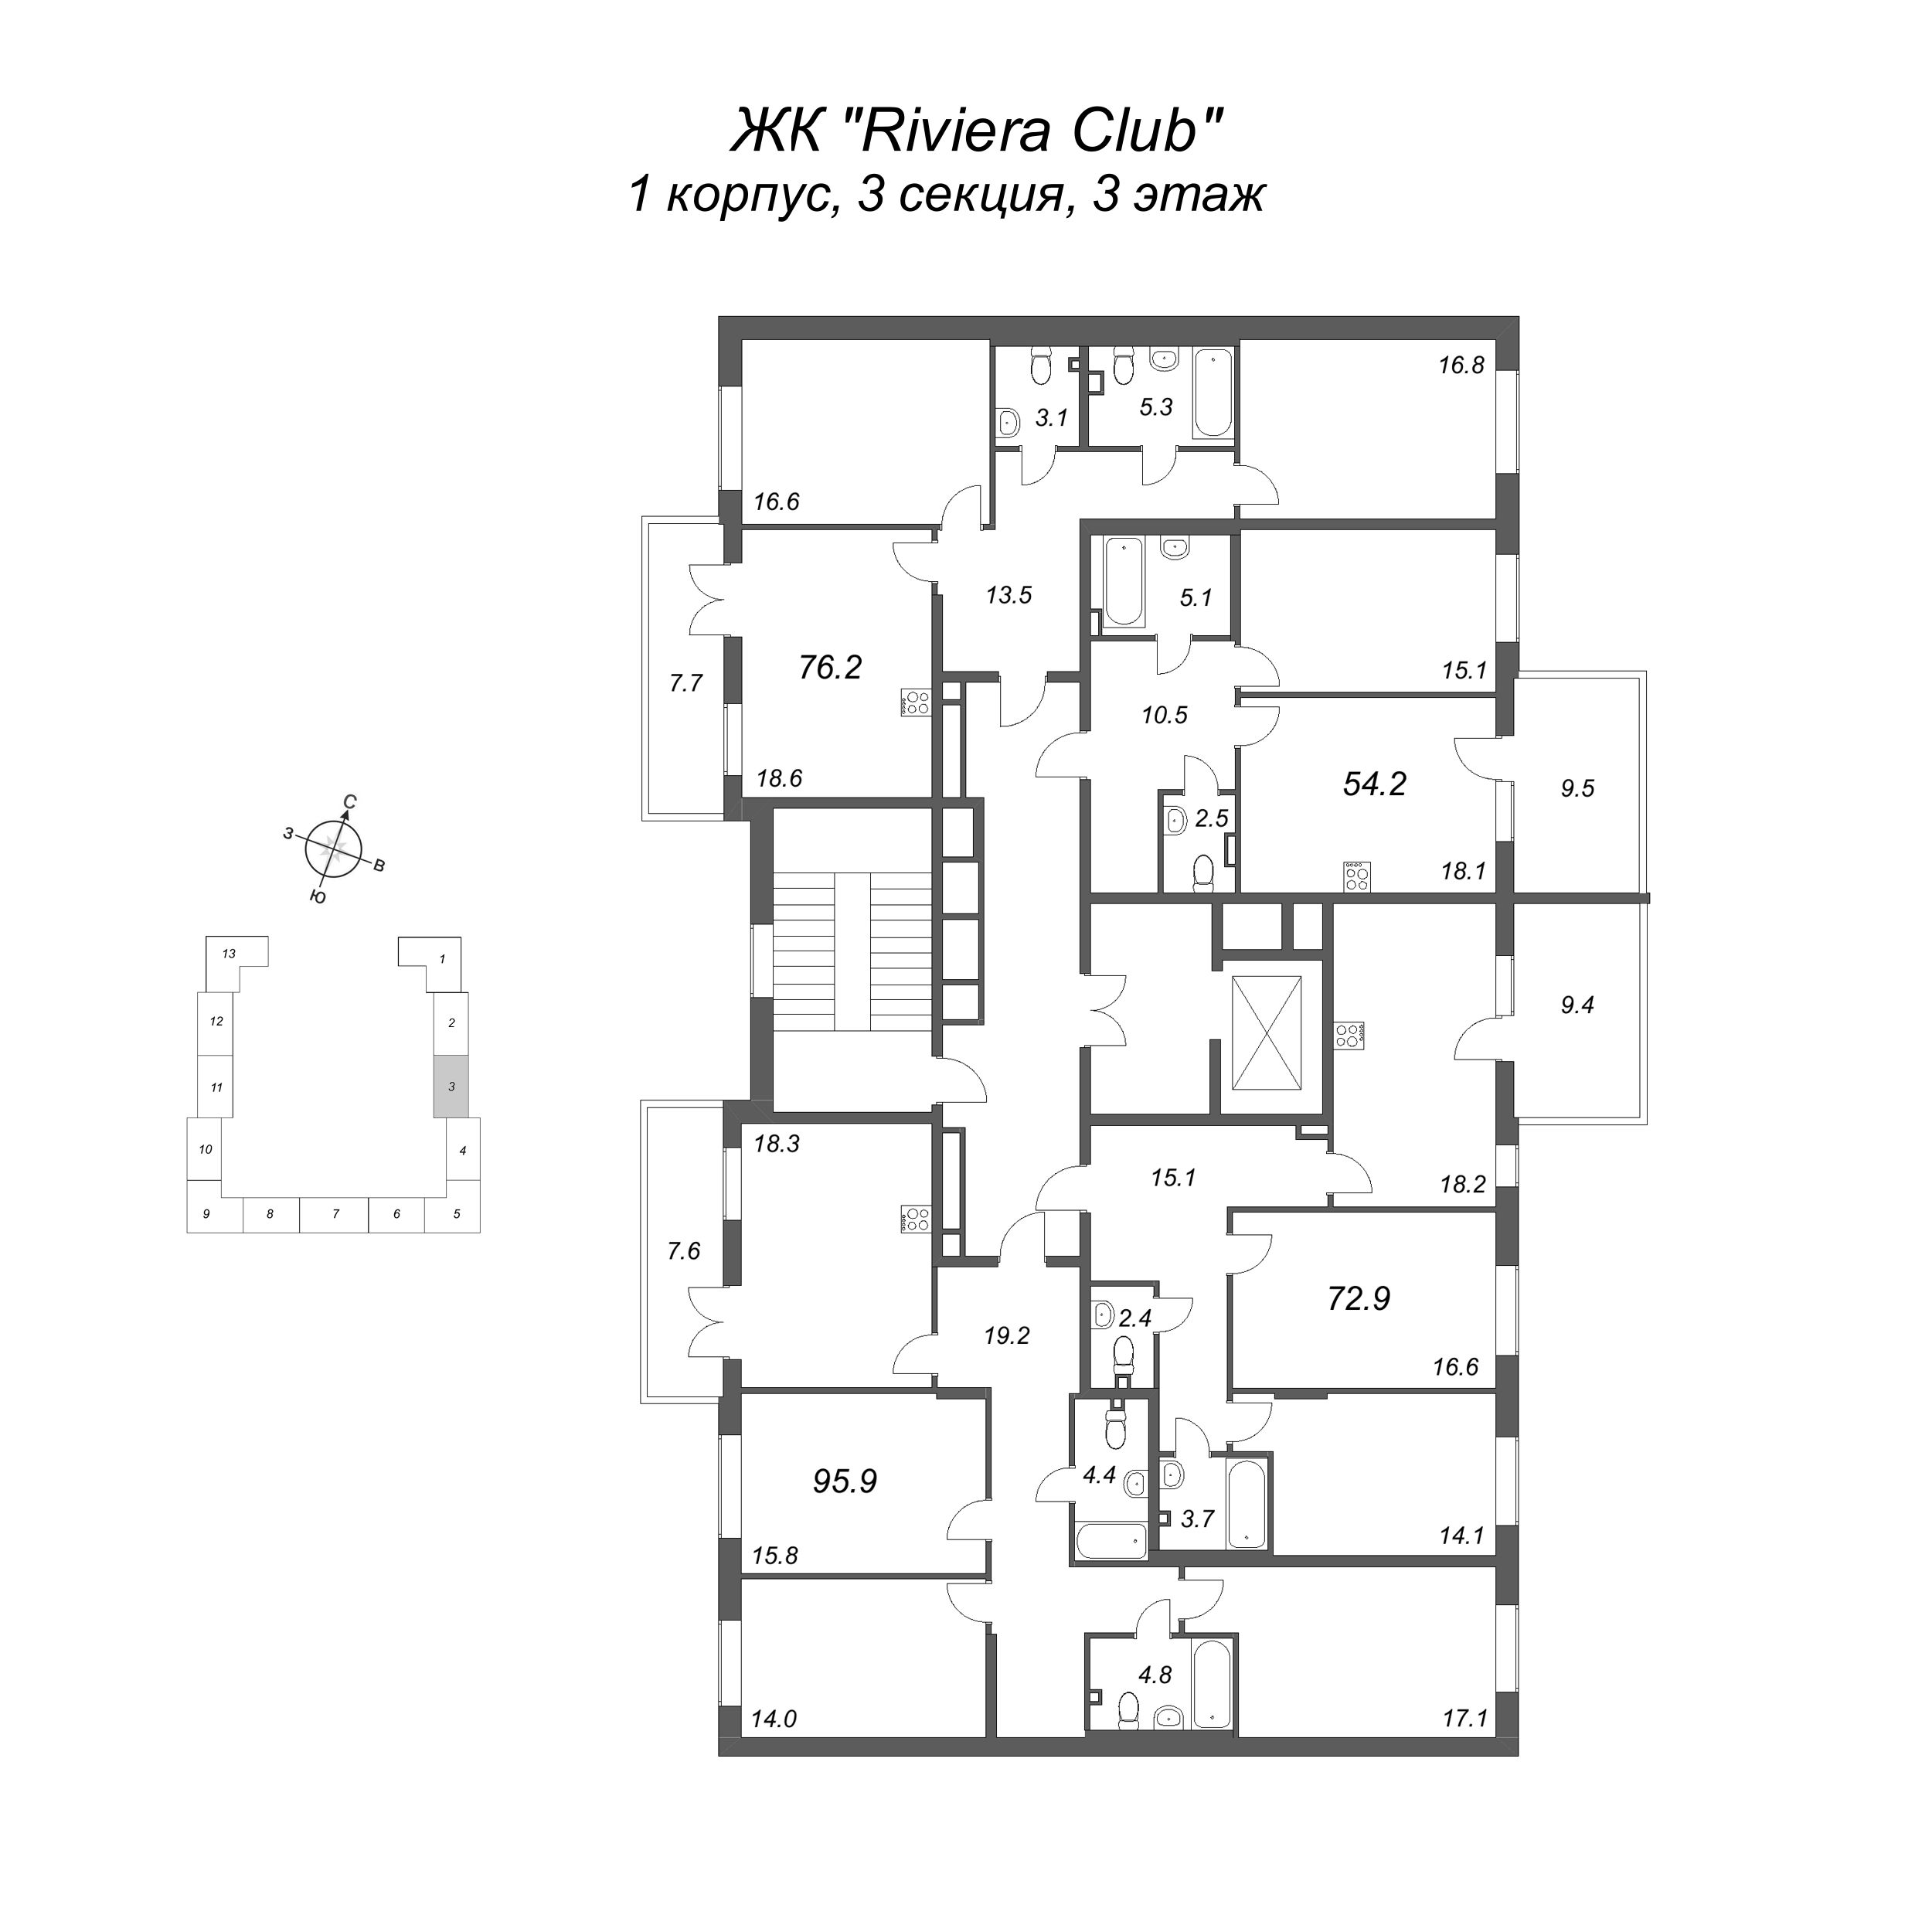 3-комнатная (Евро) квартира, 72.9 м² в ЖК "Riviera Club" - планировка этажа